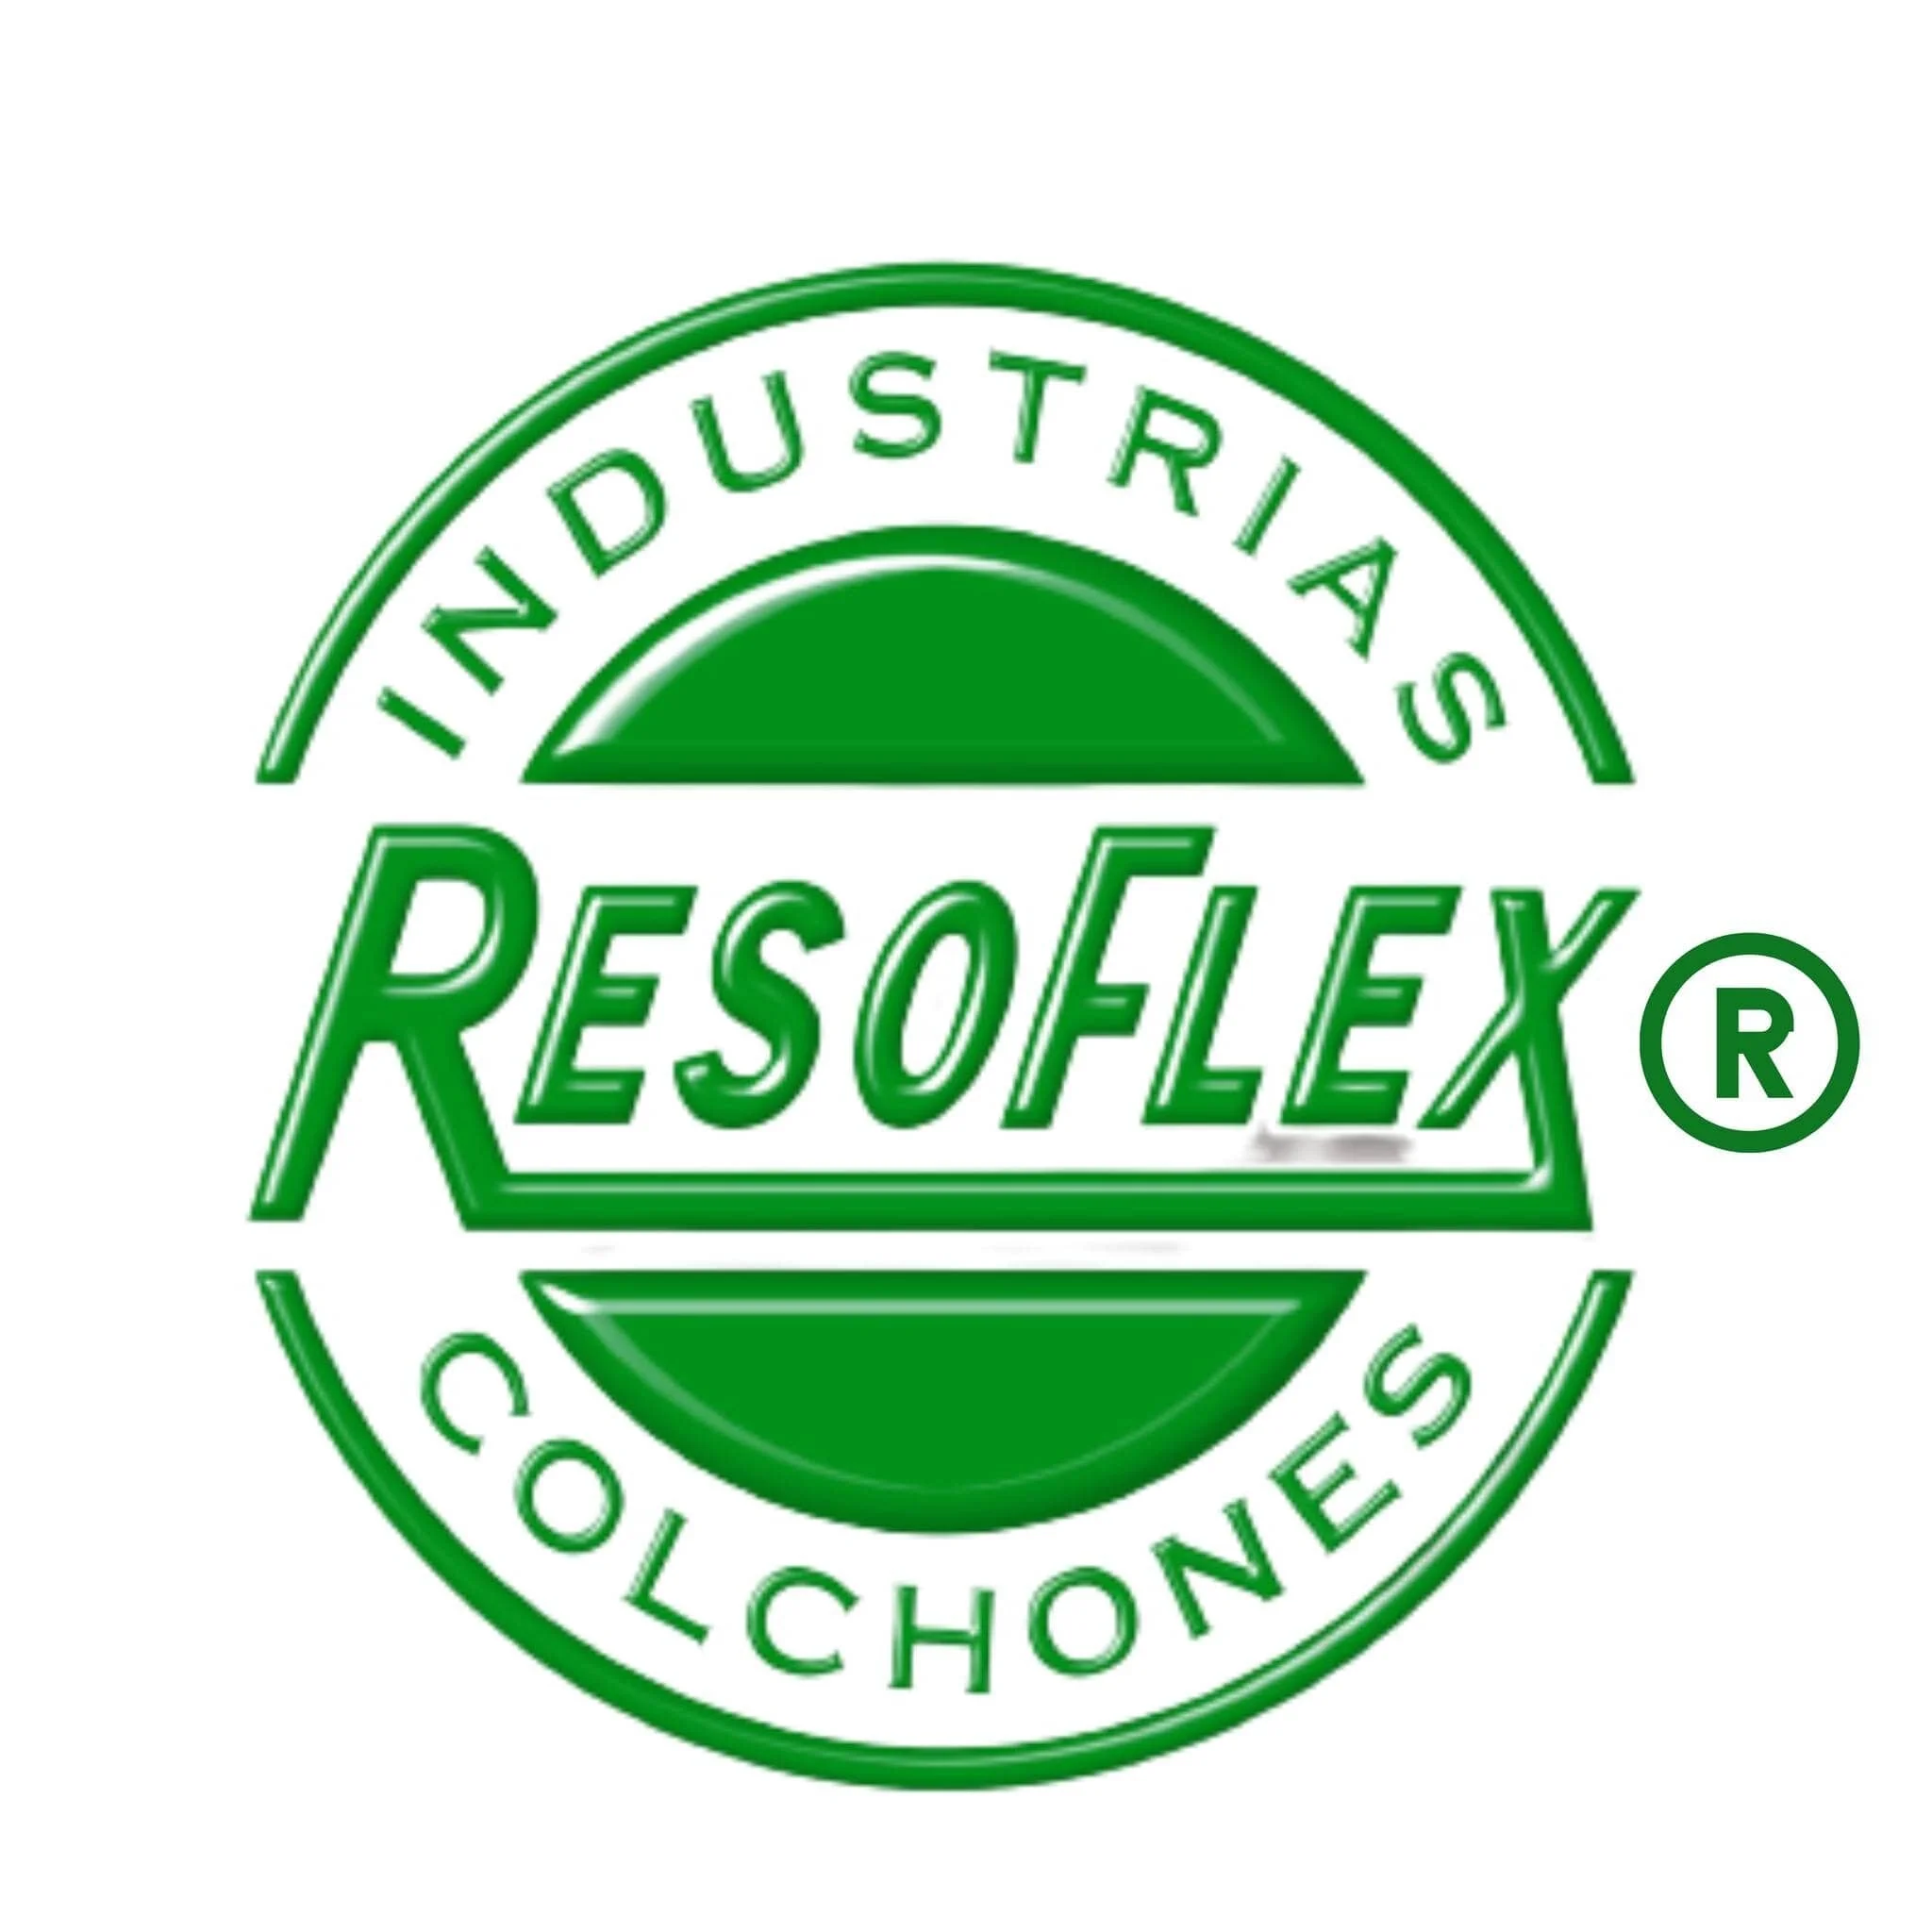 Colchones-industrias-resoflex-16389